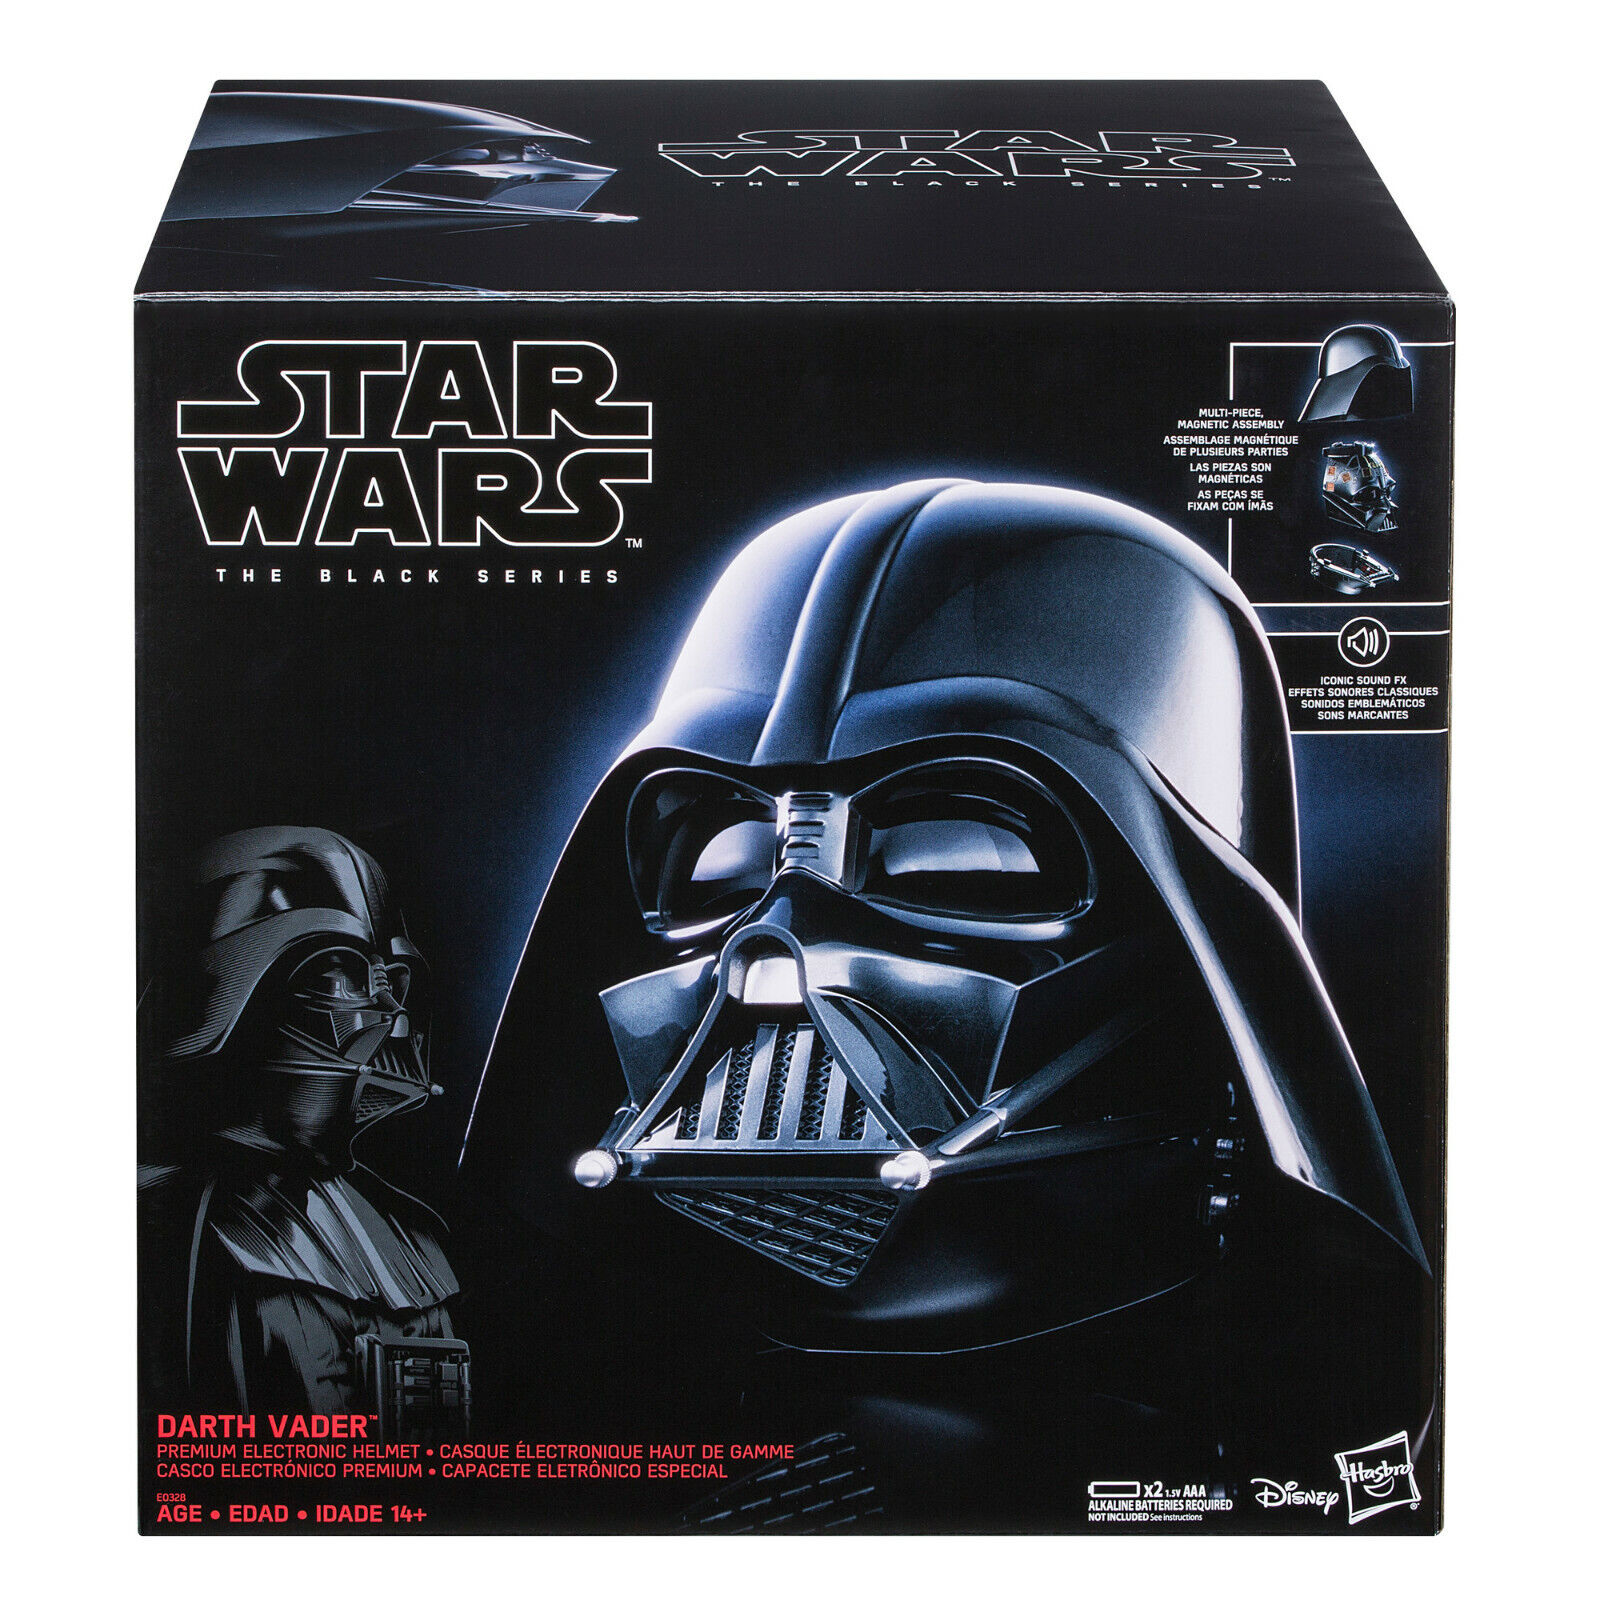 Star Wars The Black Series Darth Vader Premium Electronic Helmet—NEW